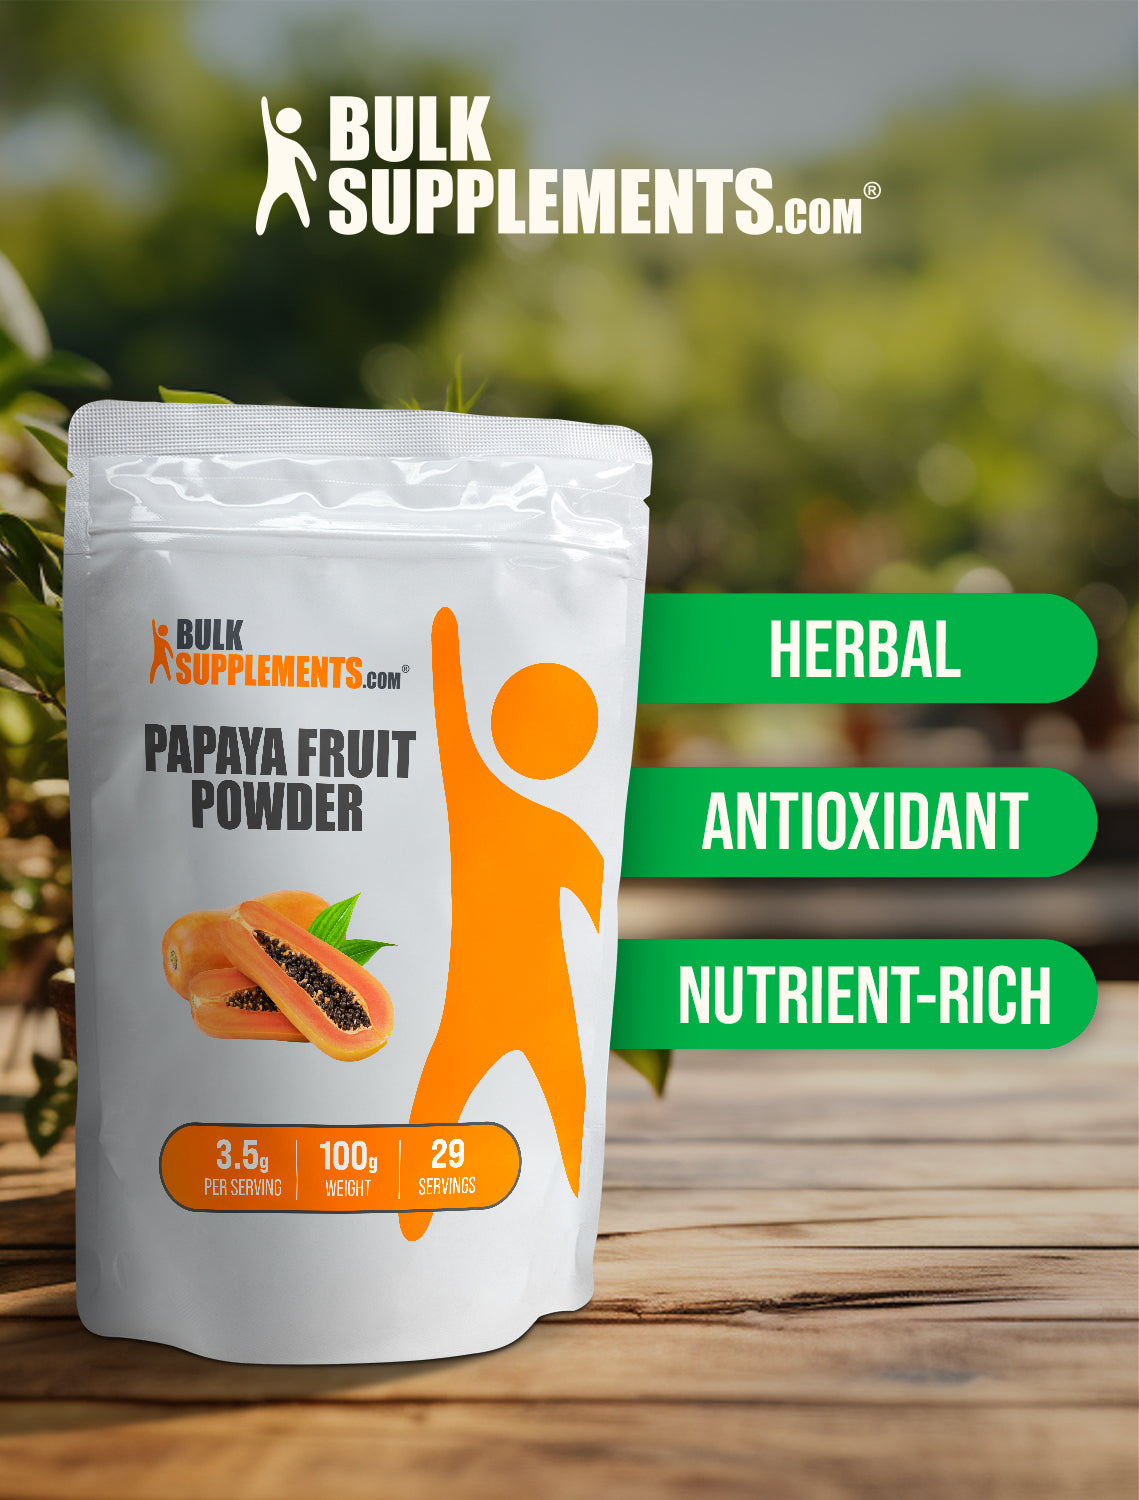 Papaya fruit powder 100g keywords image